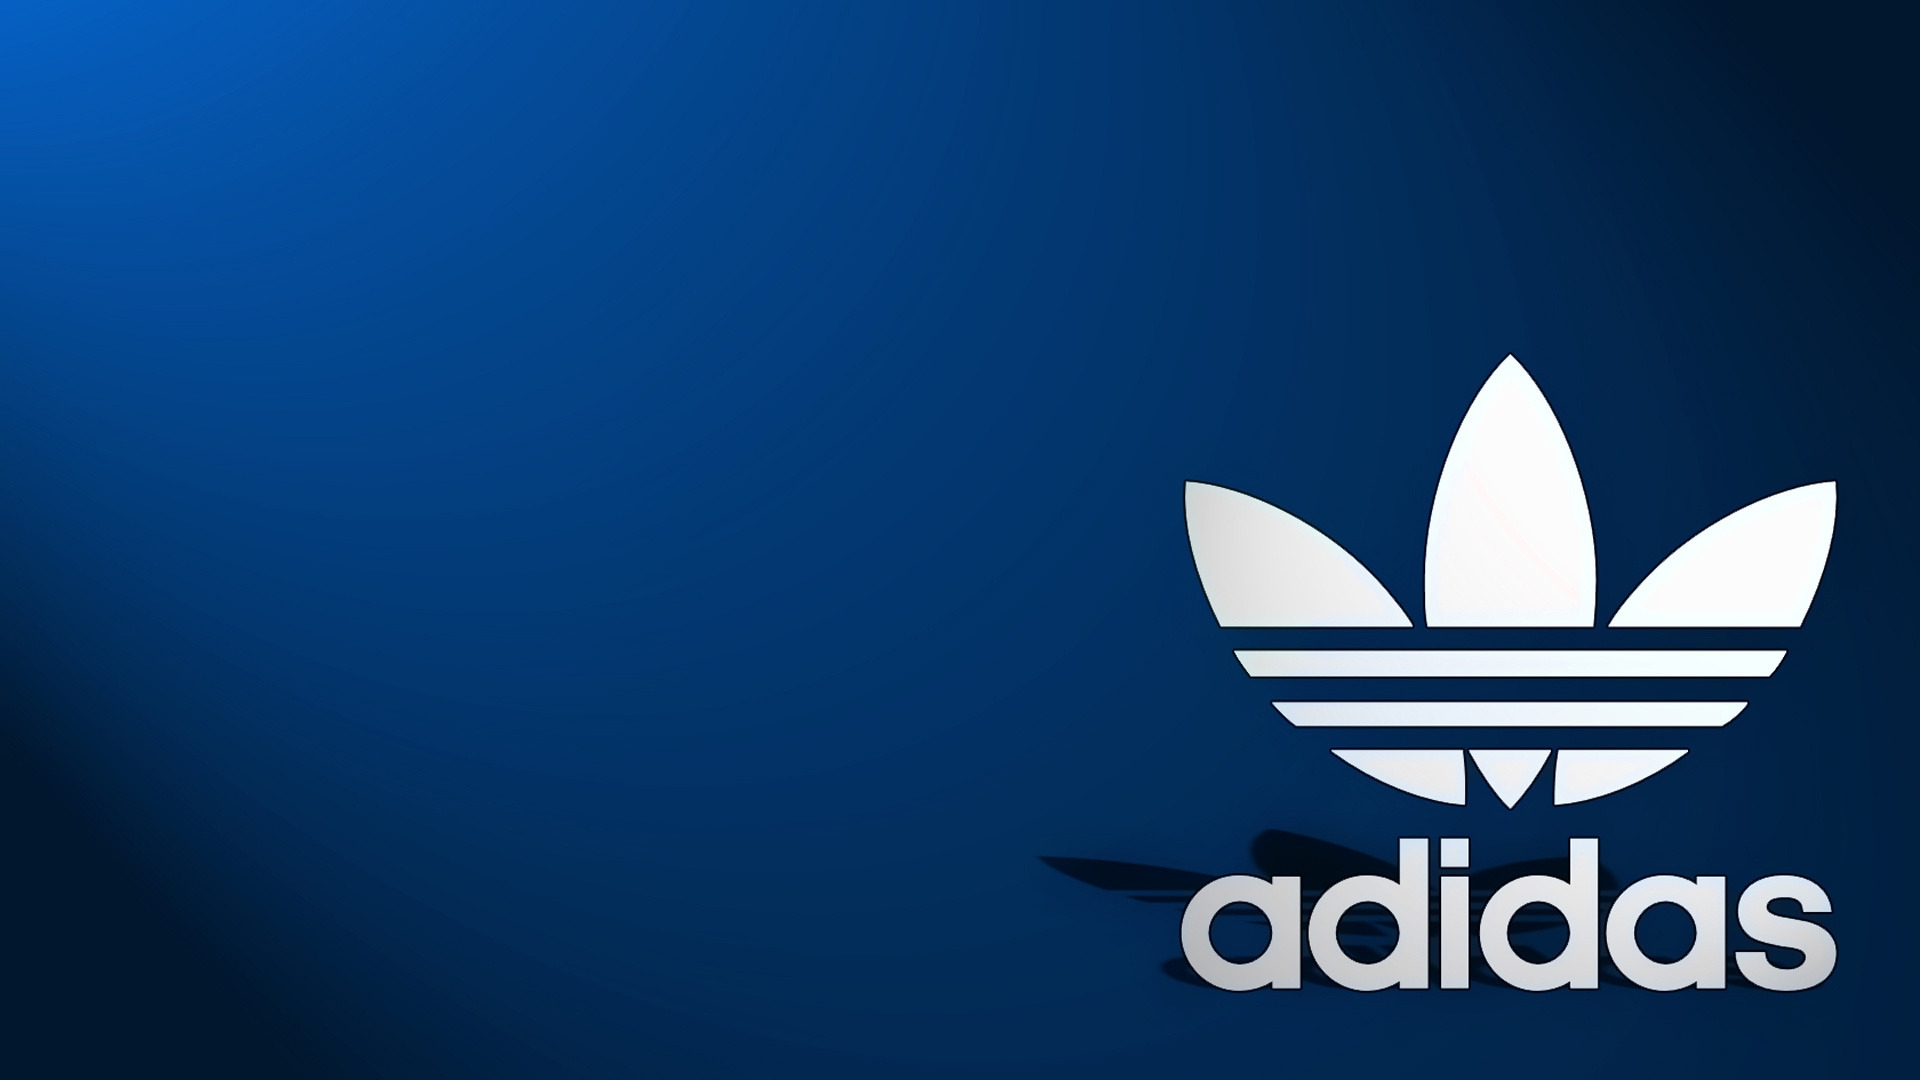 Adidas Logo Blue Background for 1920 x 1080 HDTV 1080p resolution